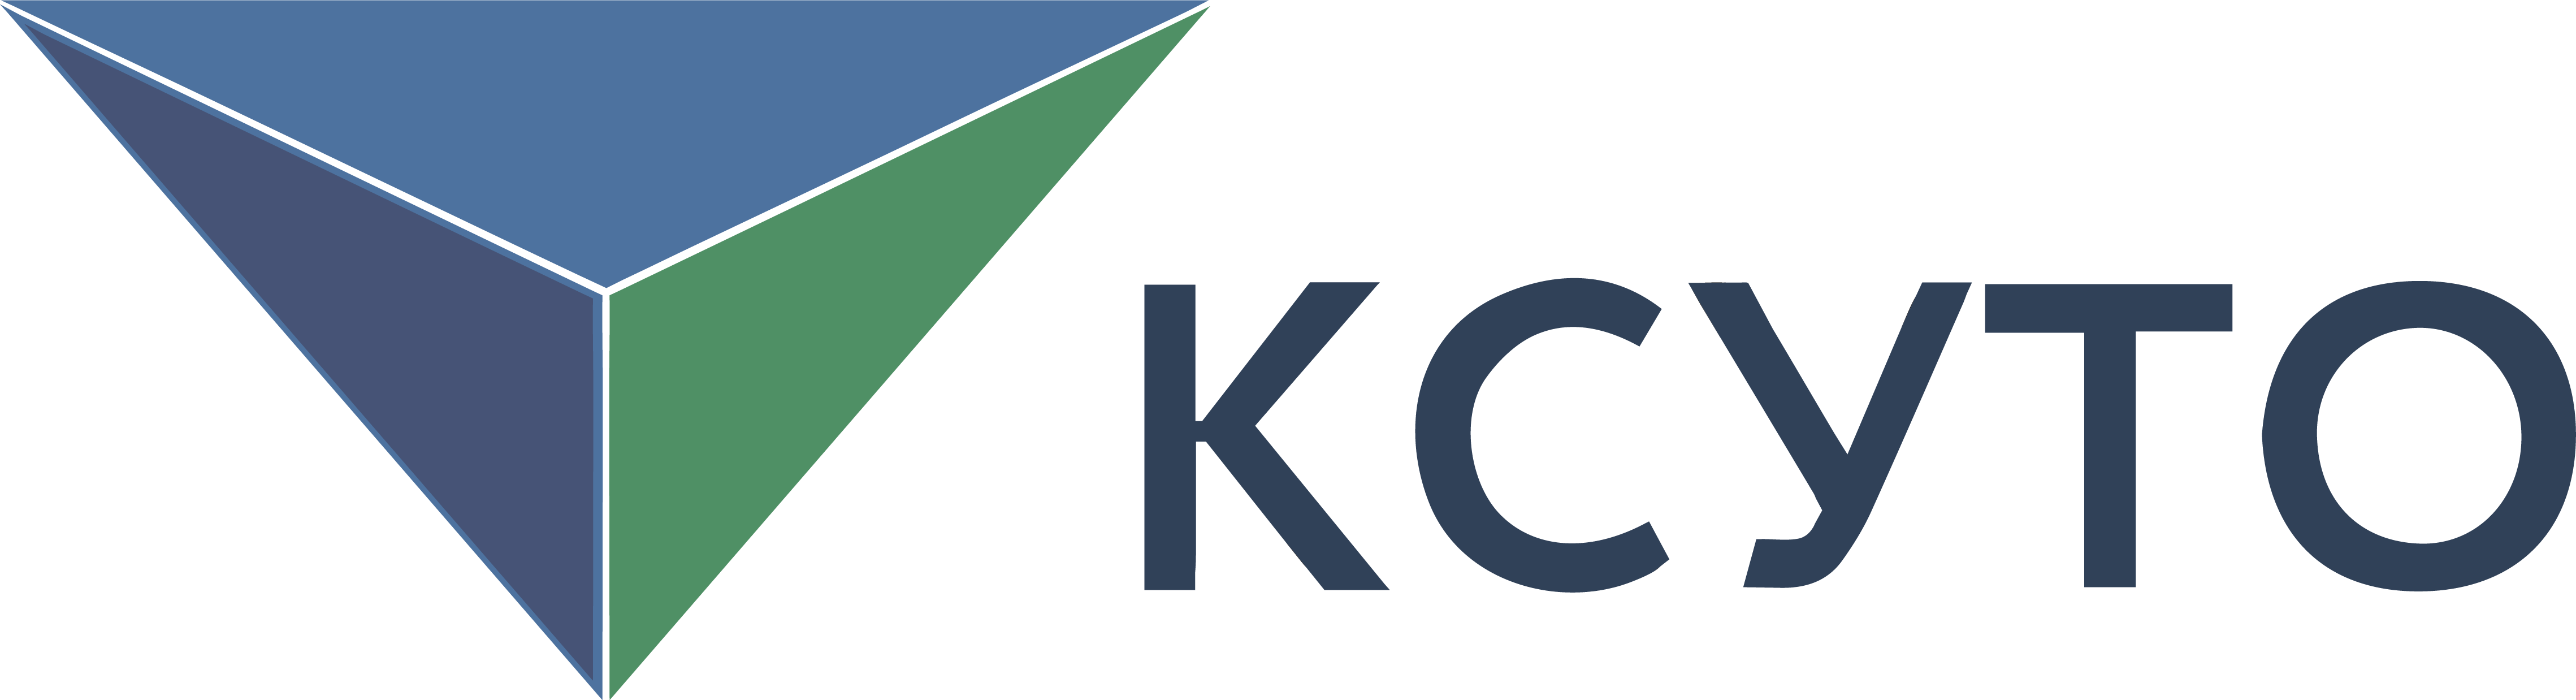 Ксуто logo